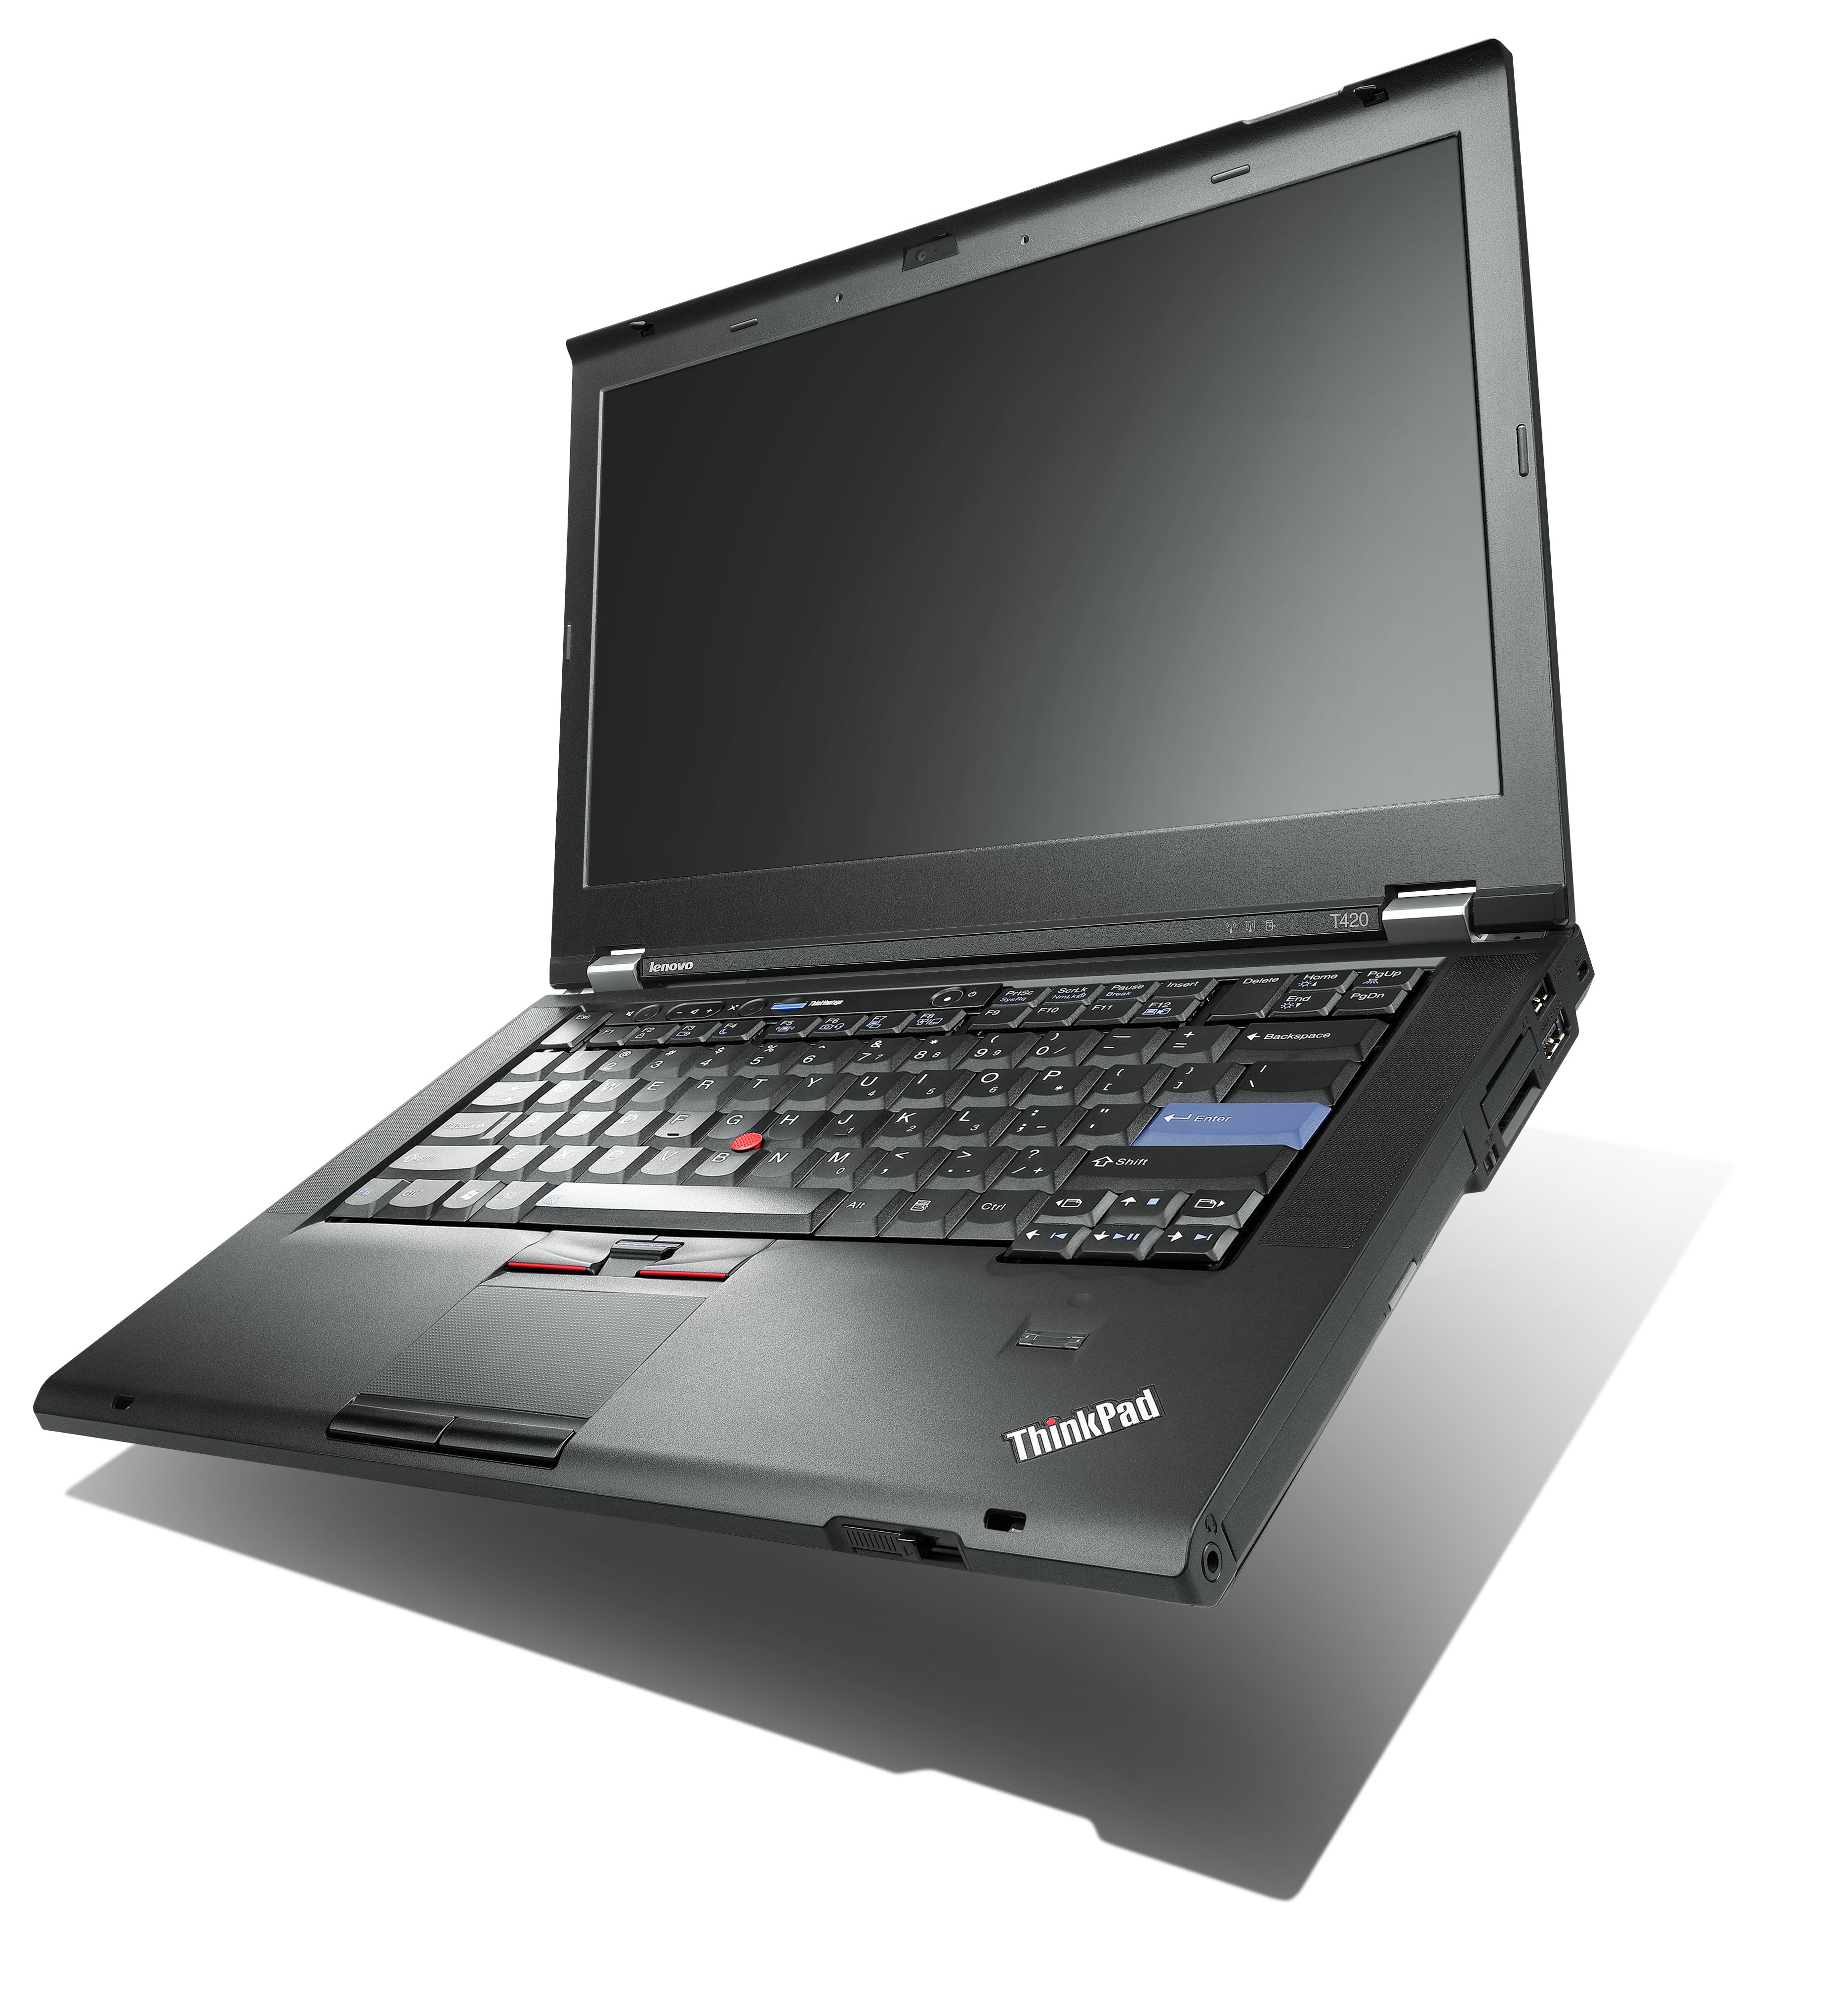 Etna ophobe foretrække Lenovo ThinkPad T420 Details, Specs and Photos